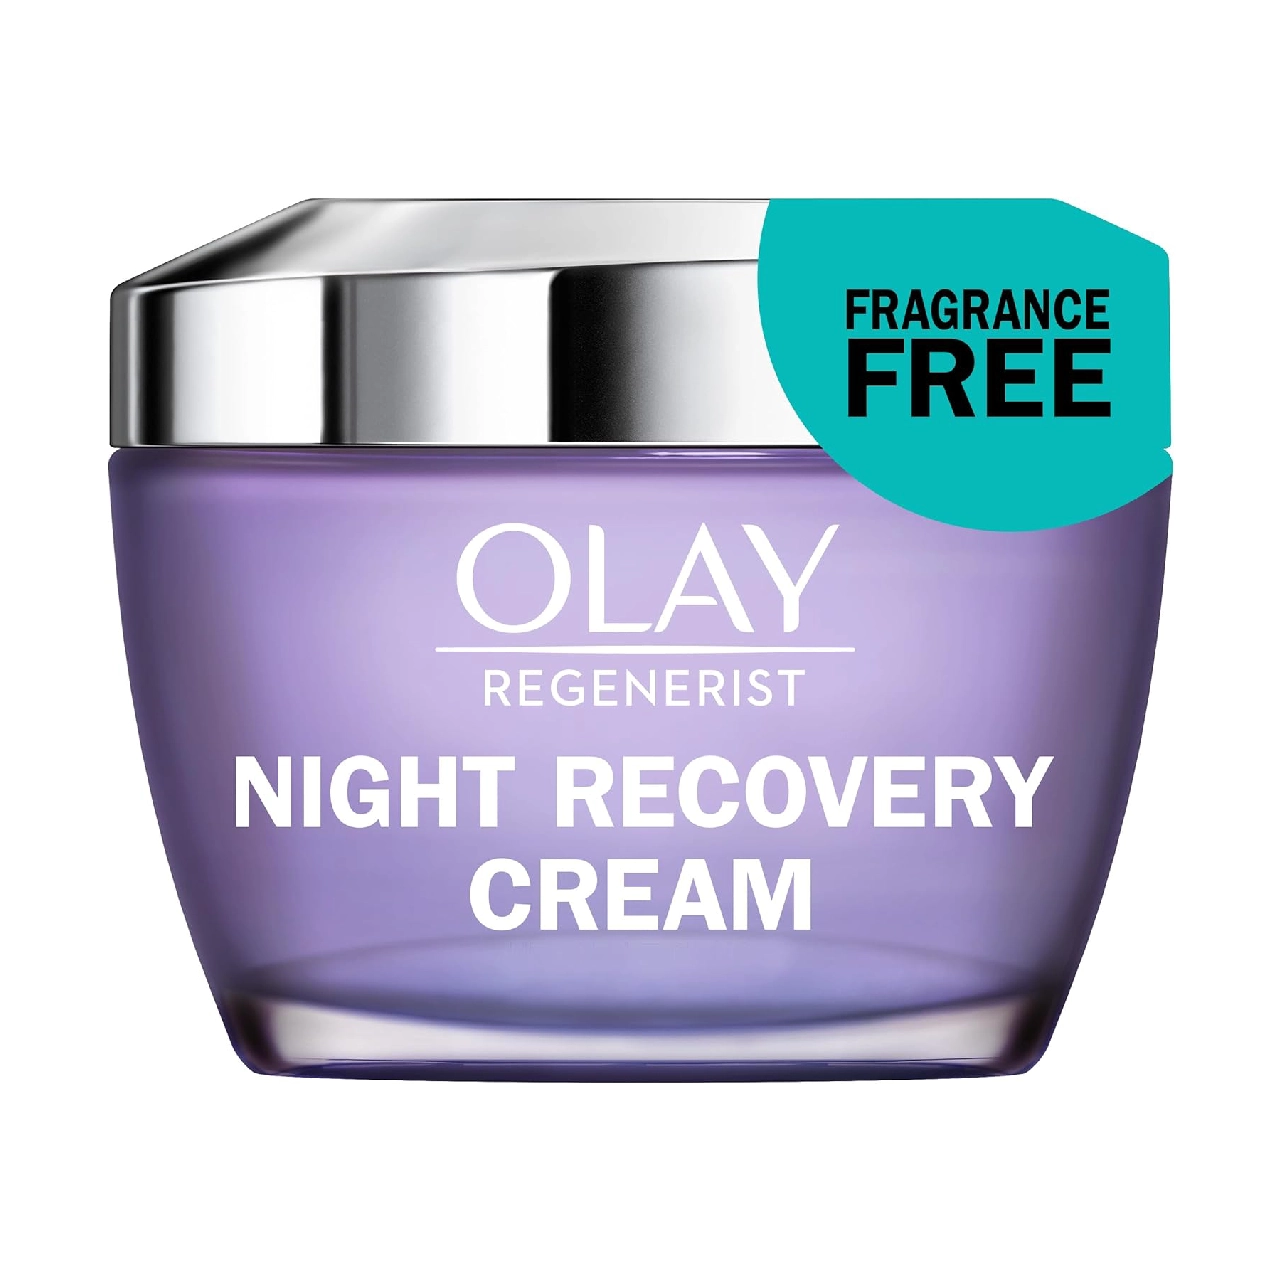 Jar of Olay Regenerist Night Recovery Cream on a white background